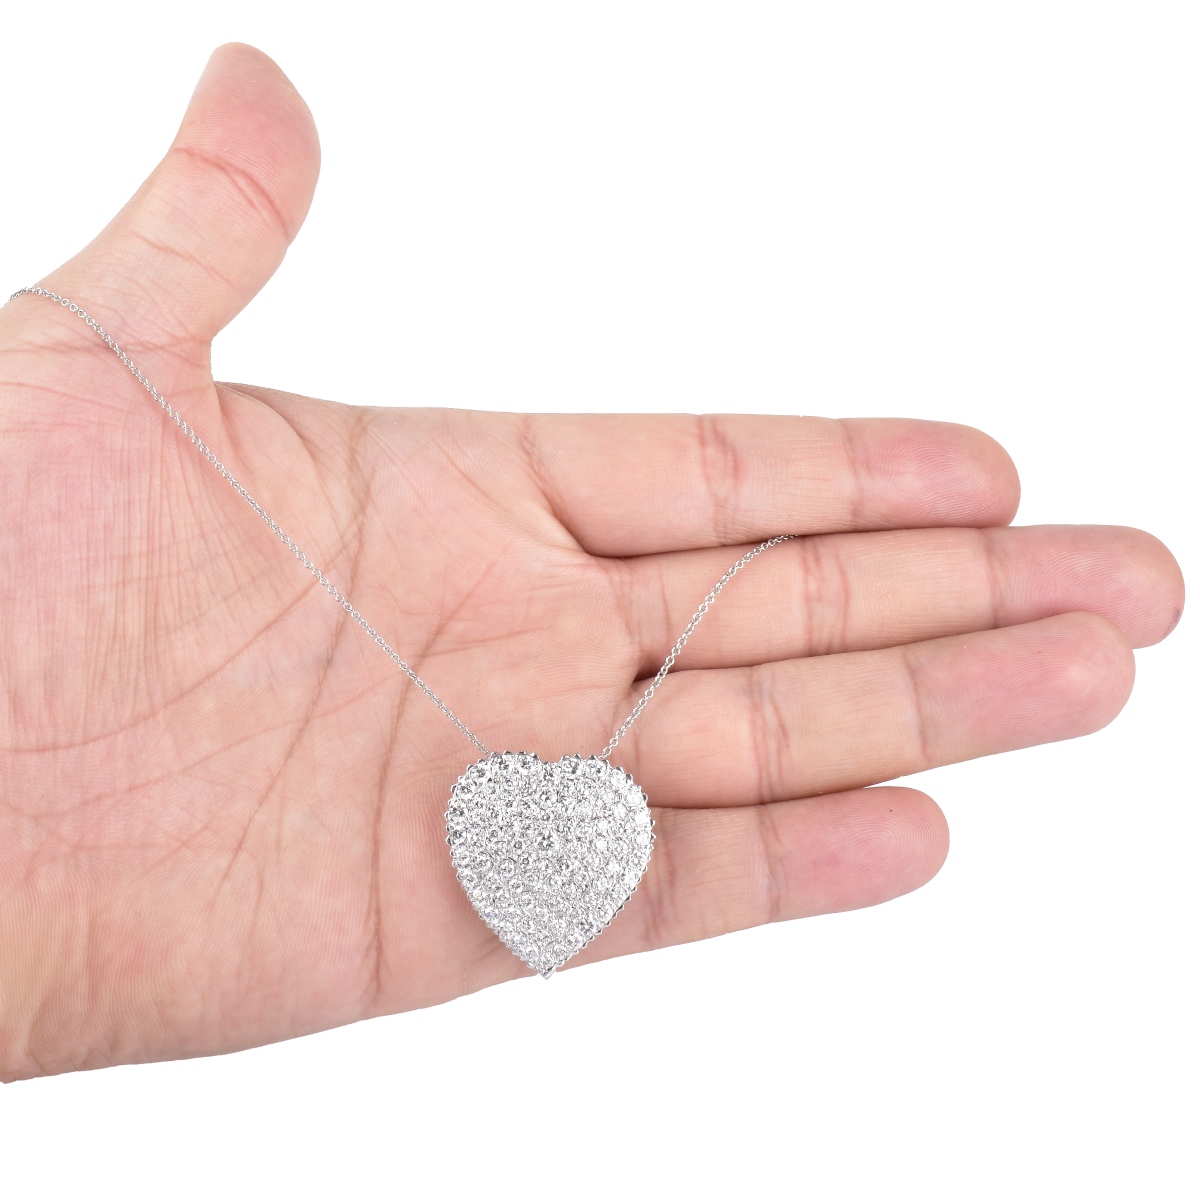 3.50ct Diamond Heart Pendant Necklace